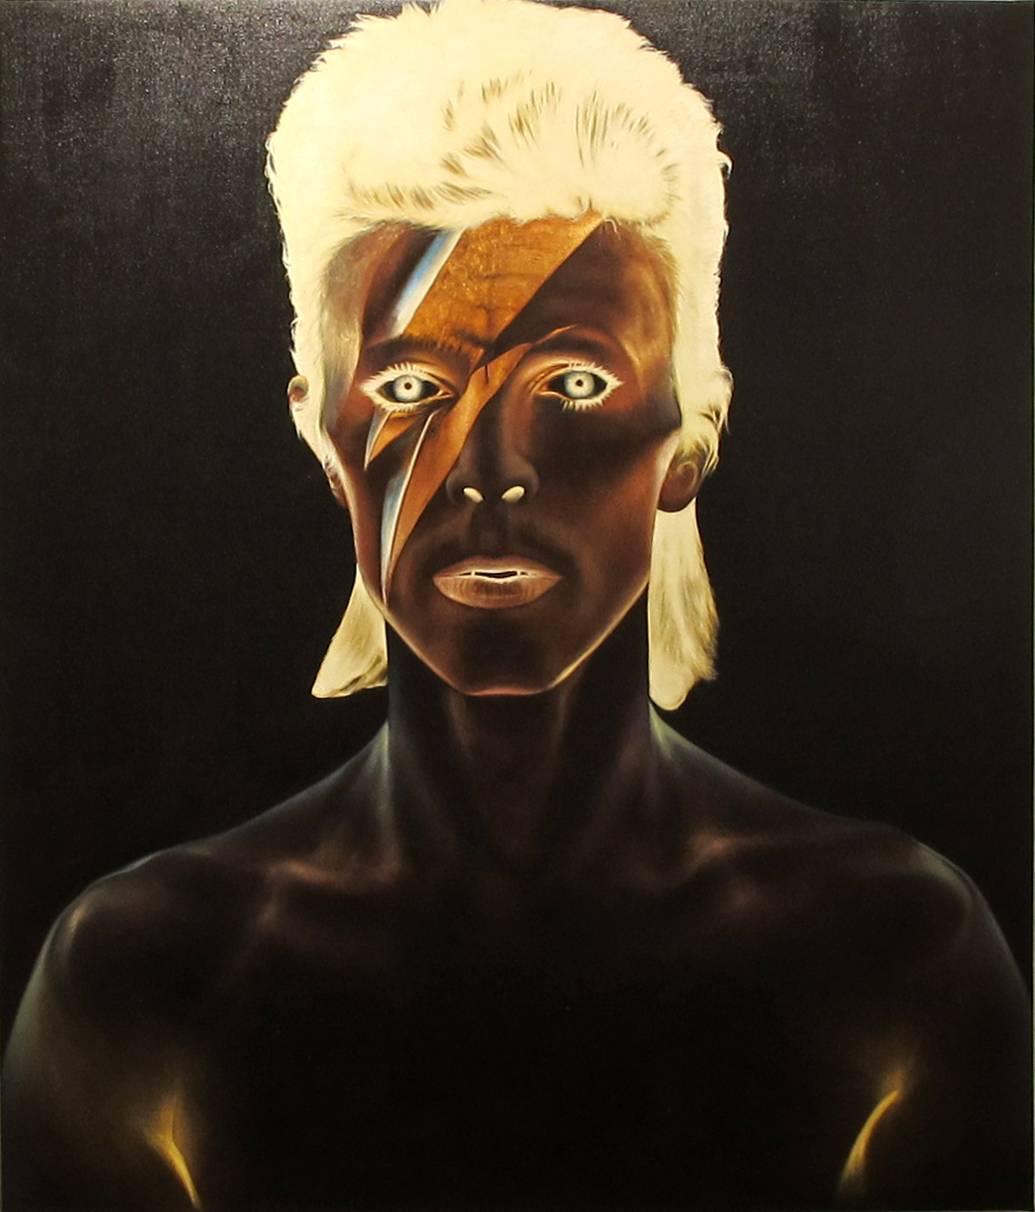 KARTEL Figurative Painting - David Bowie, Oil on canvas, portrait of the rockstar, black background